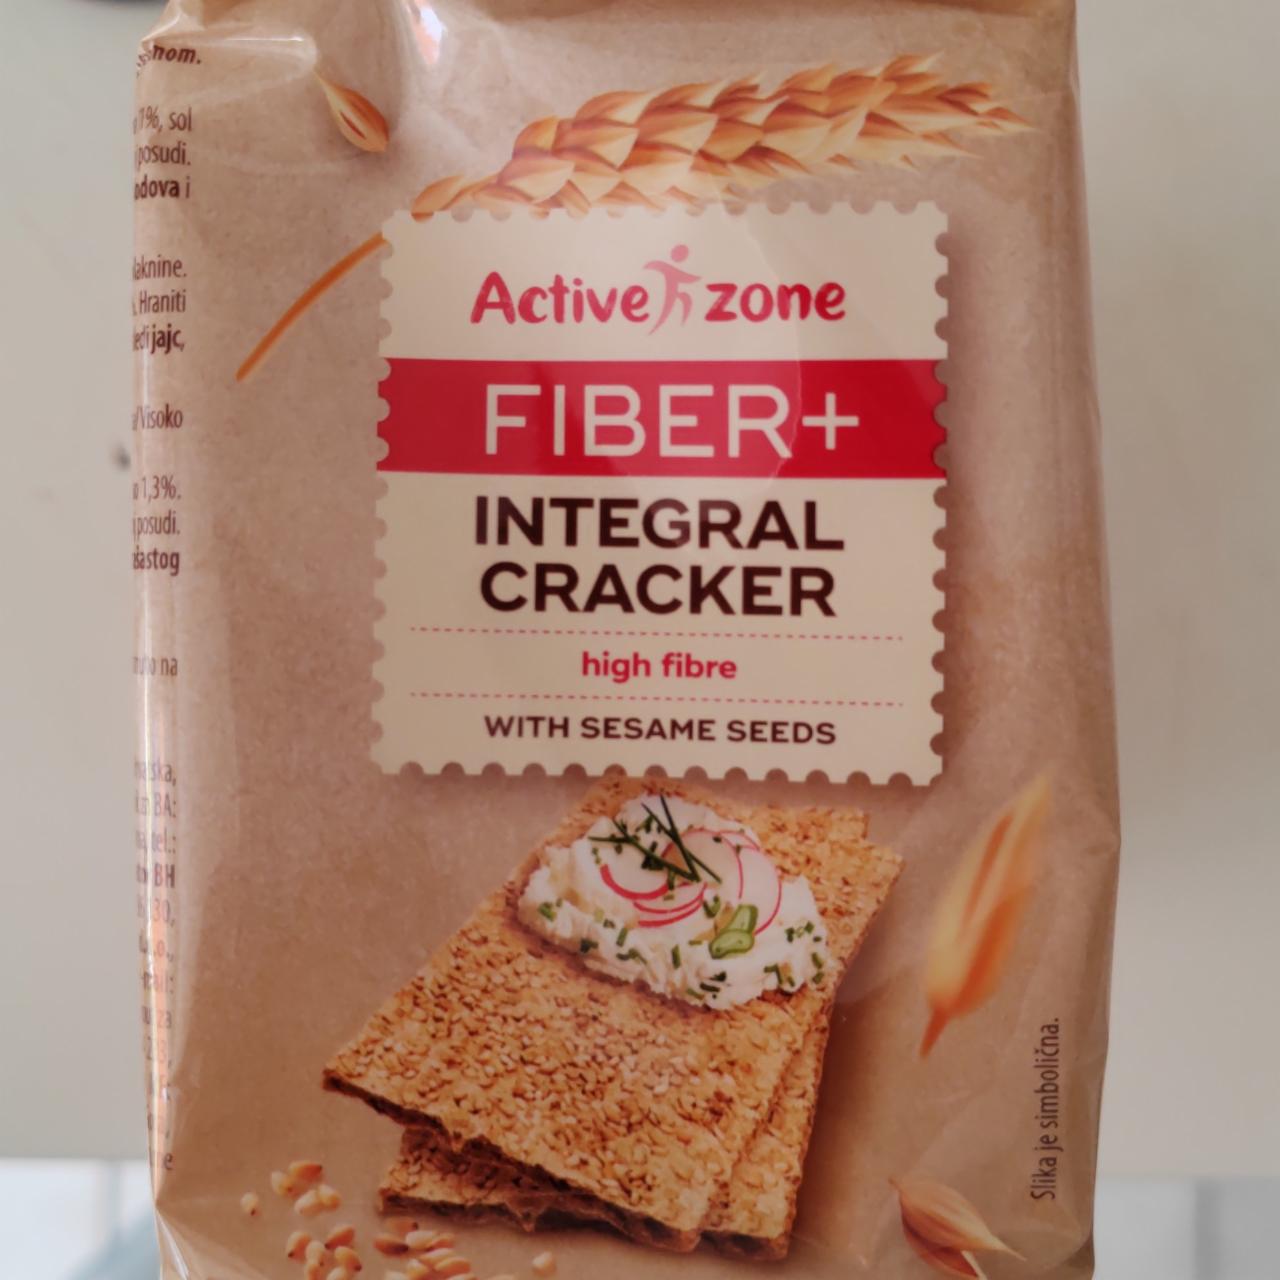 Fotografie - Fiber+ integral cracker Active zone